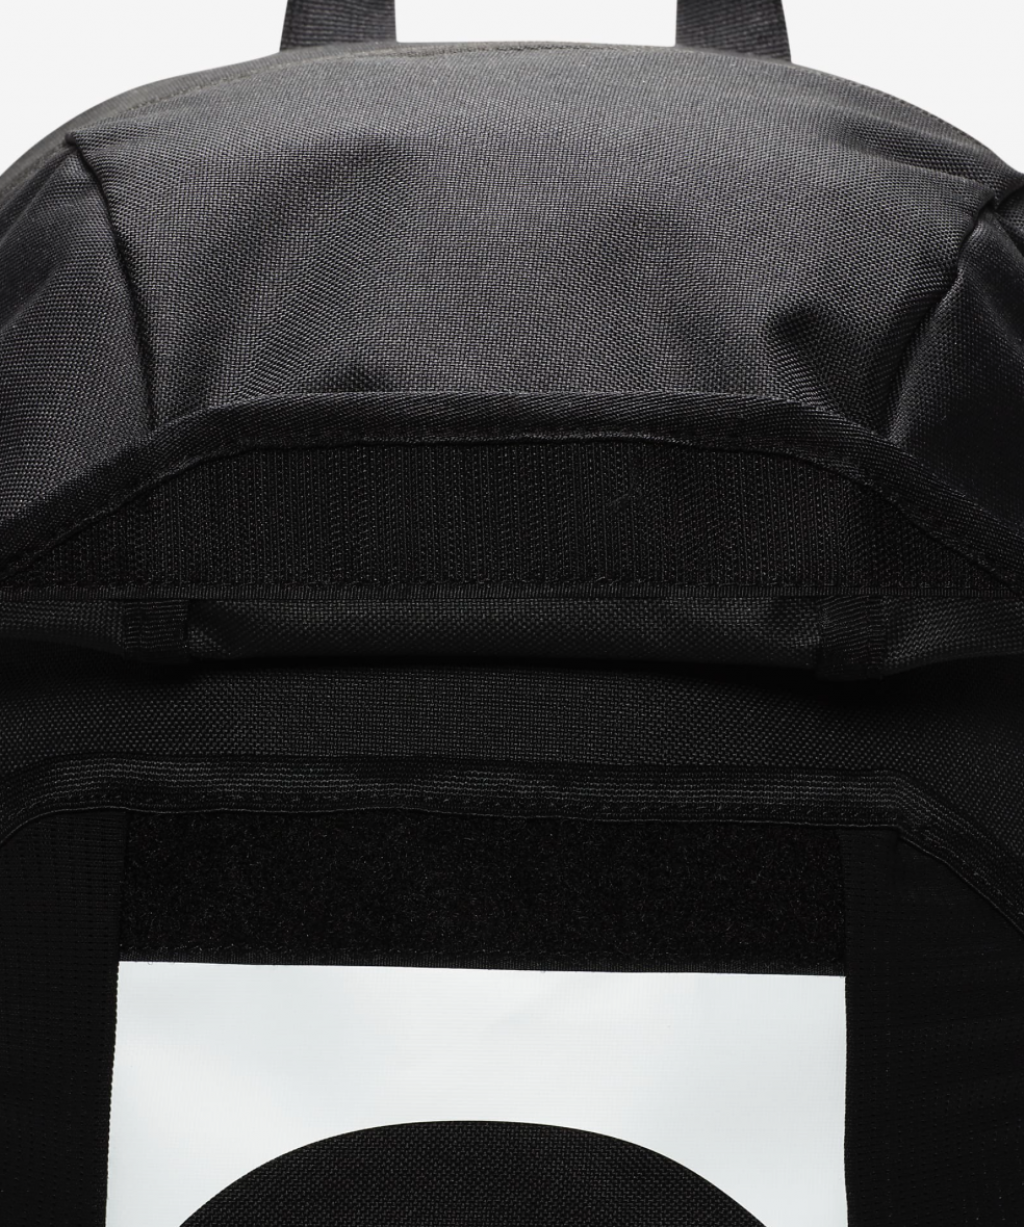 Рюкзак Nike Academy Team Backpack